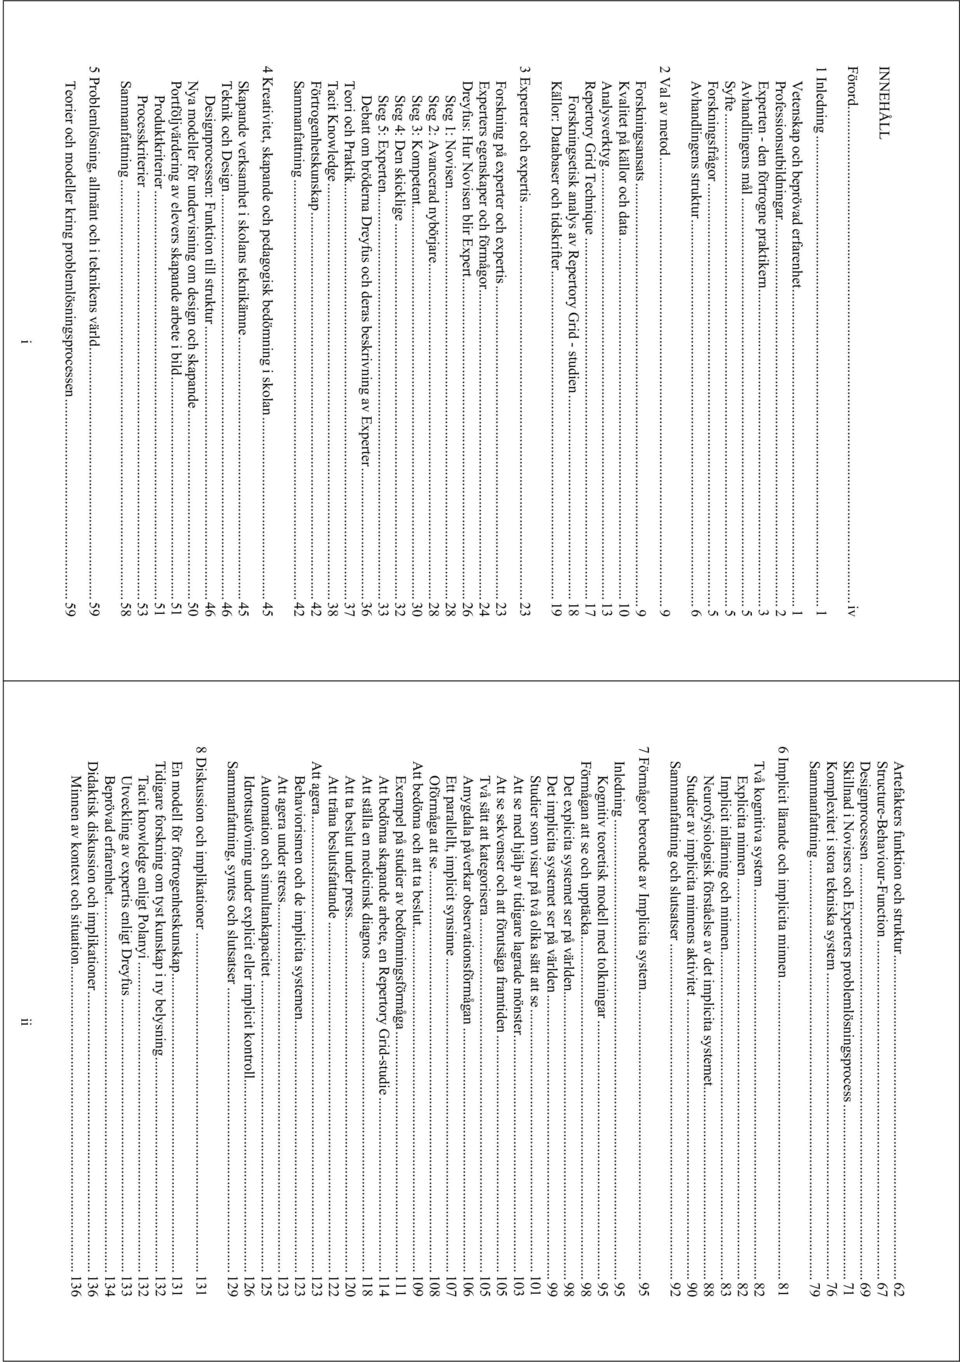 .. 17 Forskningsetisk analys av Repertory Grid - studien... 18 Källor: Databaser och tidskrifter... 19 3 Experter och expertis... 23 Forskning på experter och expertis.